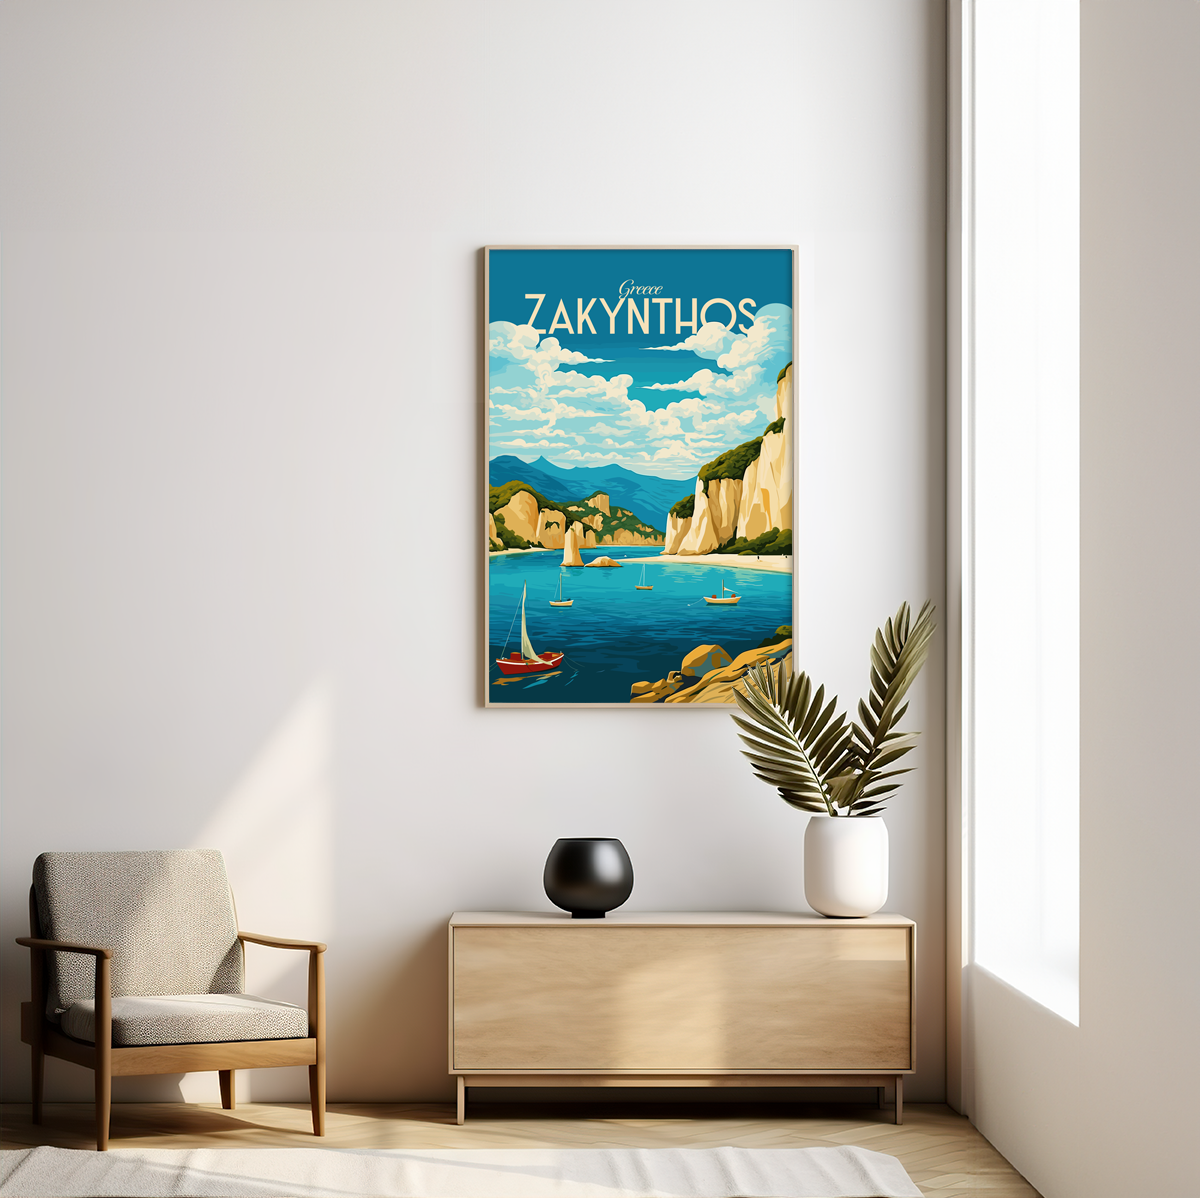 Zakynthos poster by bon voyage design